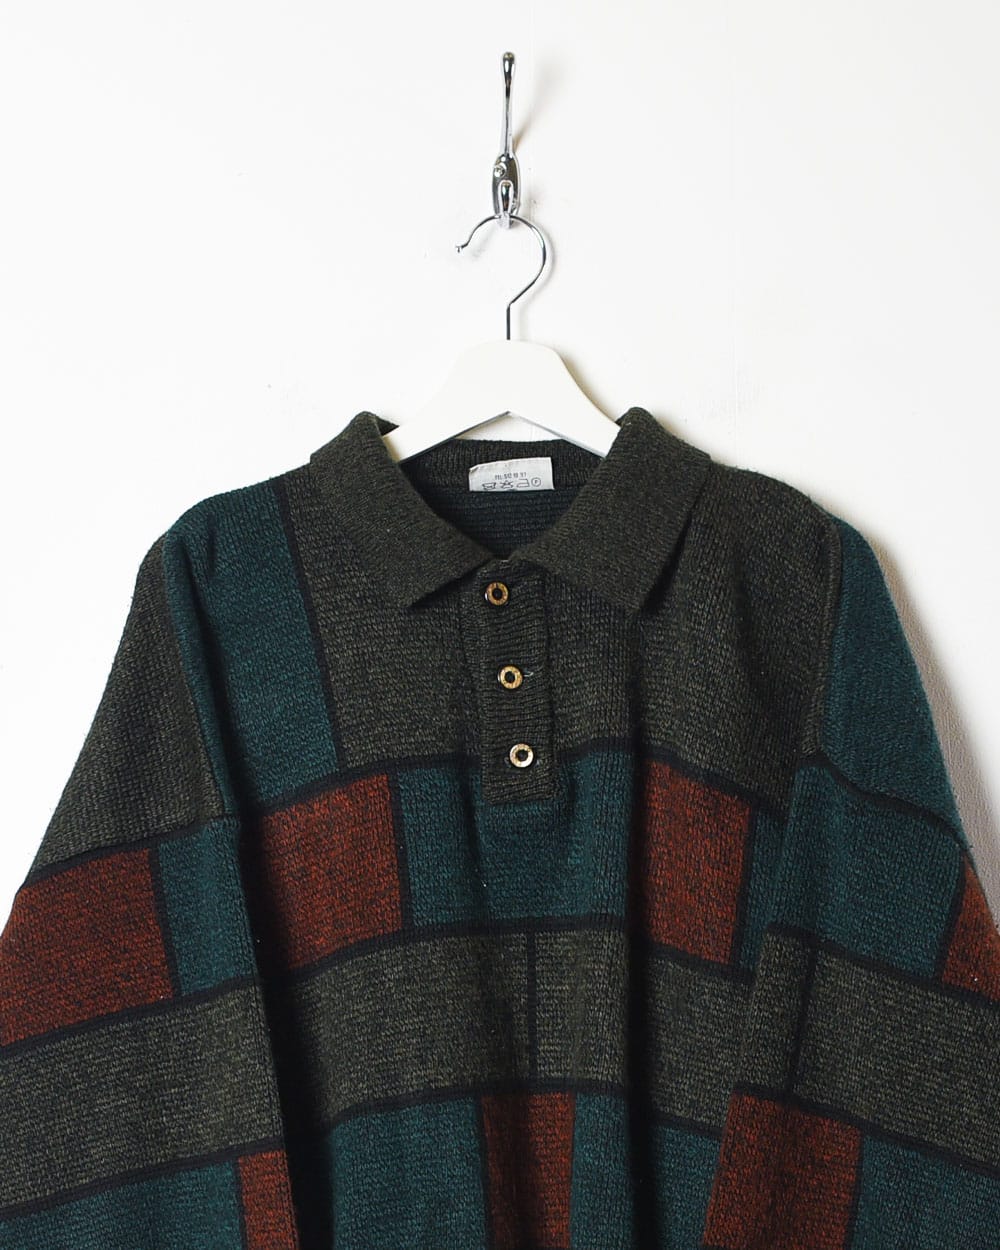 Green Rafael Collared Patterned Knitted Sweatshirt - Medium